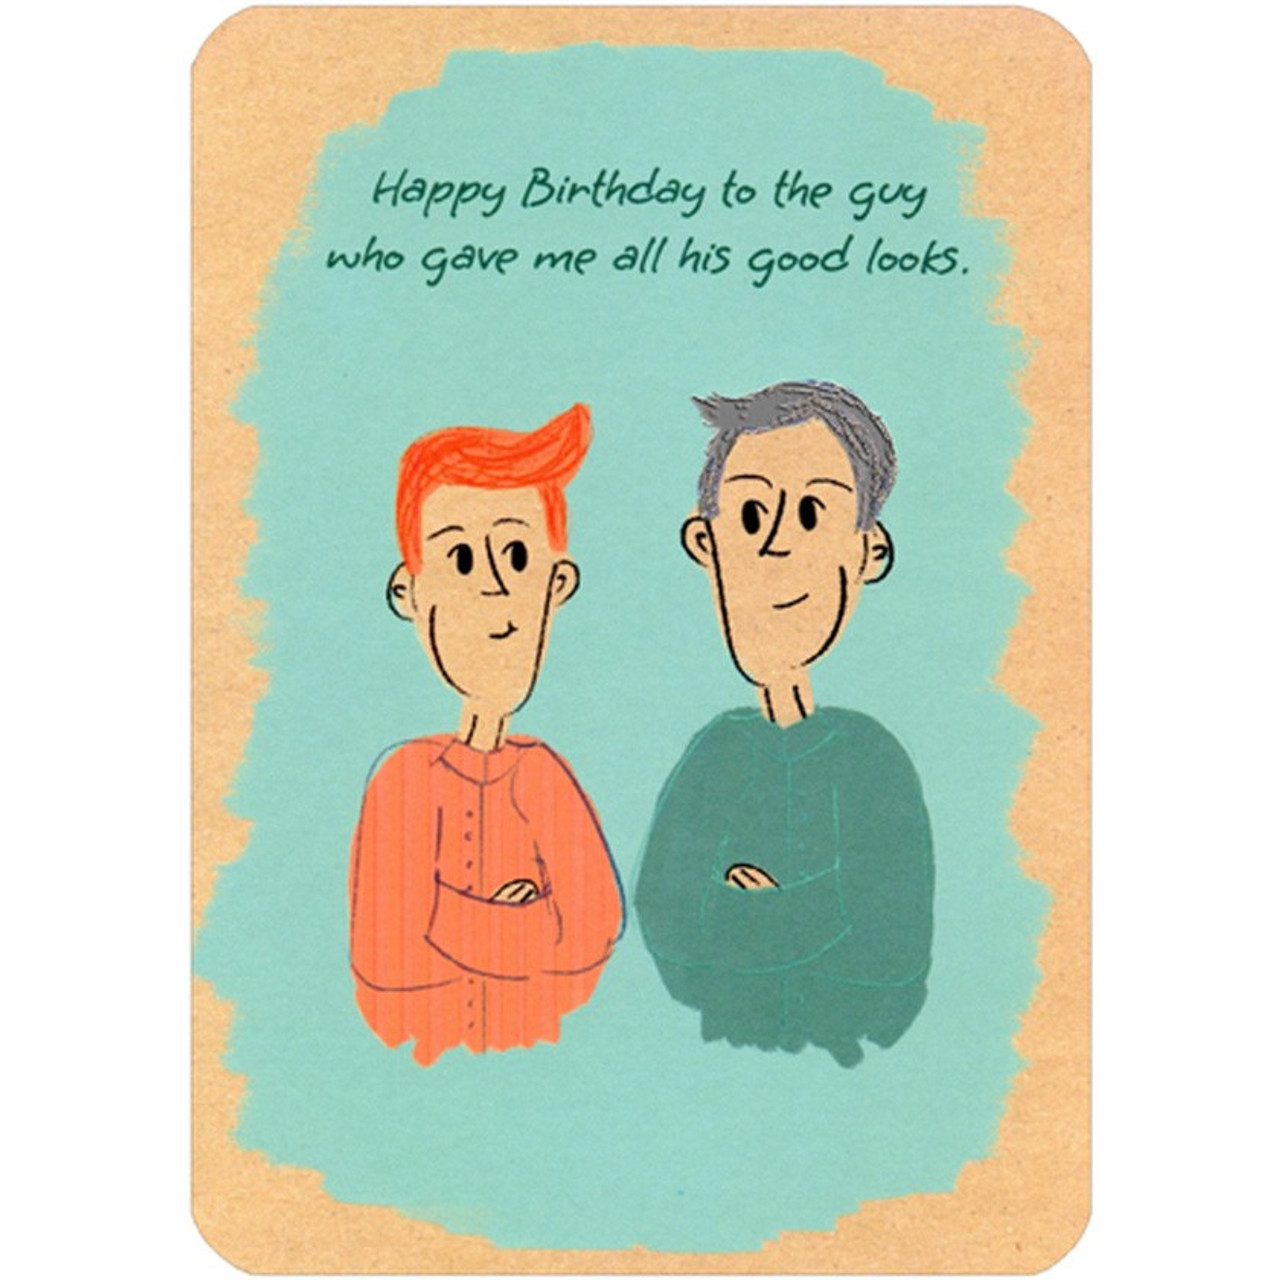 birthday card for guy